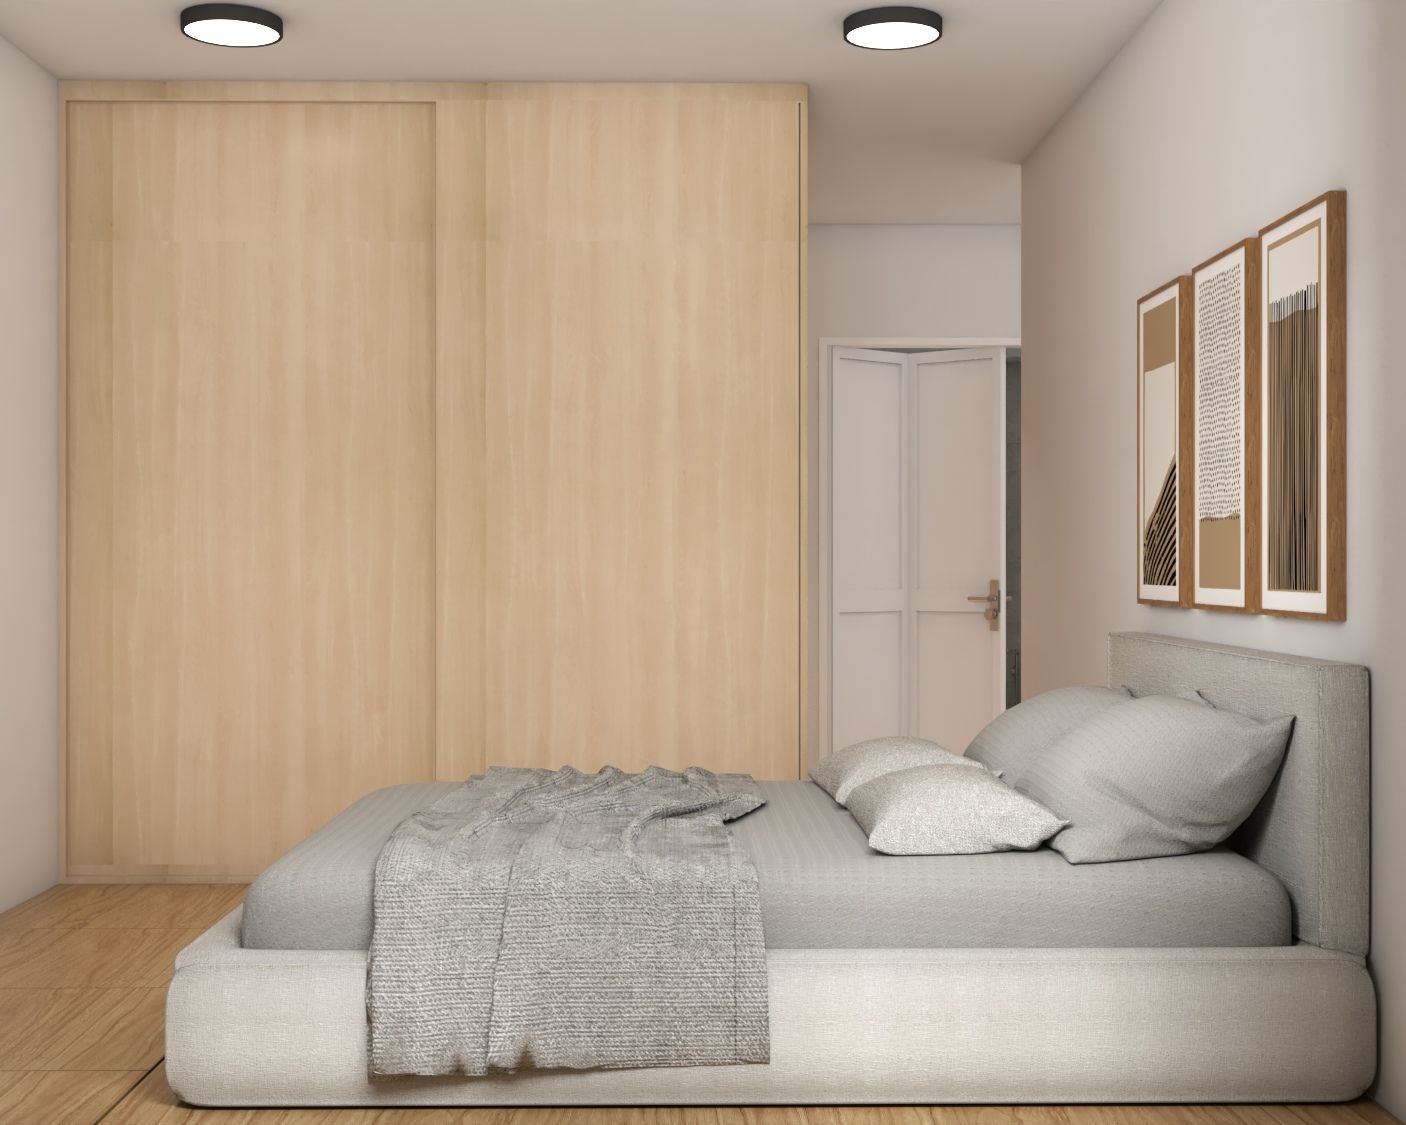 D-SGMBR-JFM2023-1185	Scandinavian Bedroom Design With A Wooden Wardrobe And Ceiling Lights